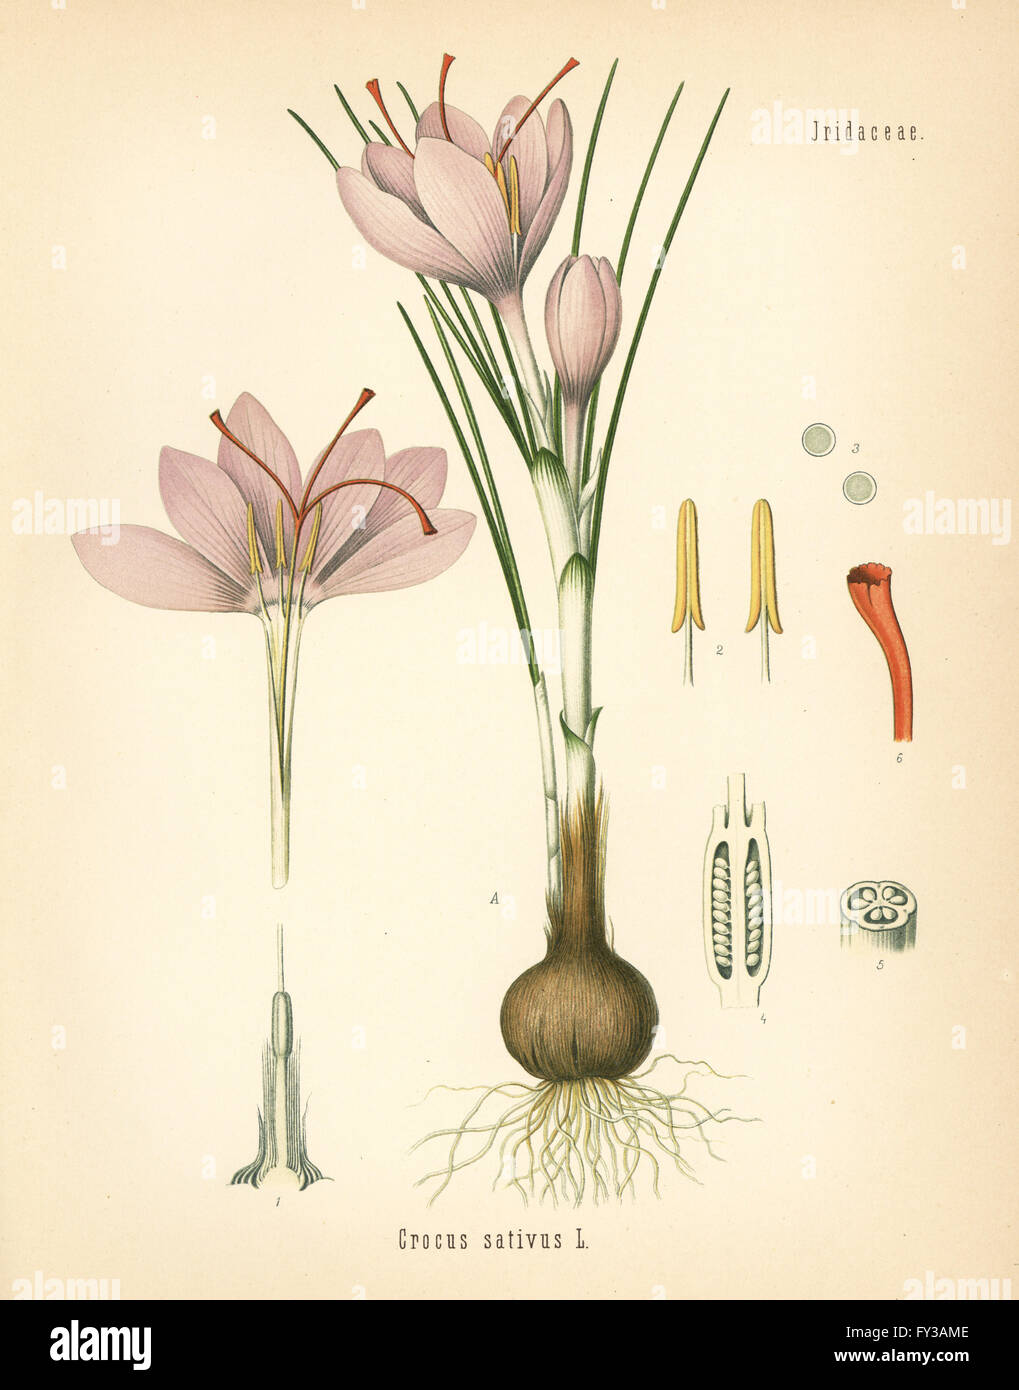 Saffron crocus, Crocus sativus. Chromolithograph after a botanical illustration from Hermann Adolph Koehler's Medicinal Plants, edited by Gustav Pabst, Koehler, Germany, 1887. Stock Photo